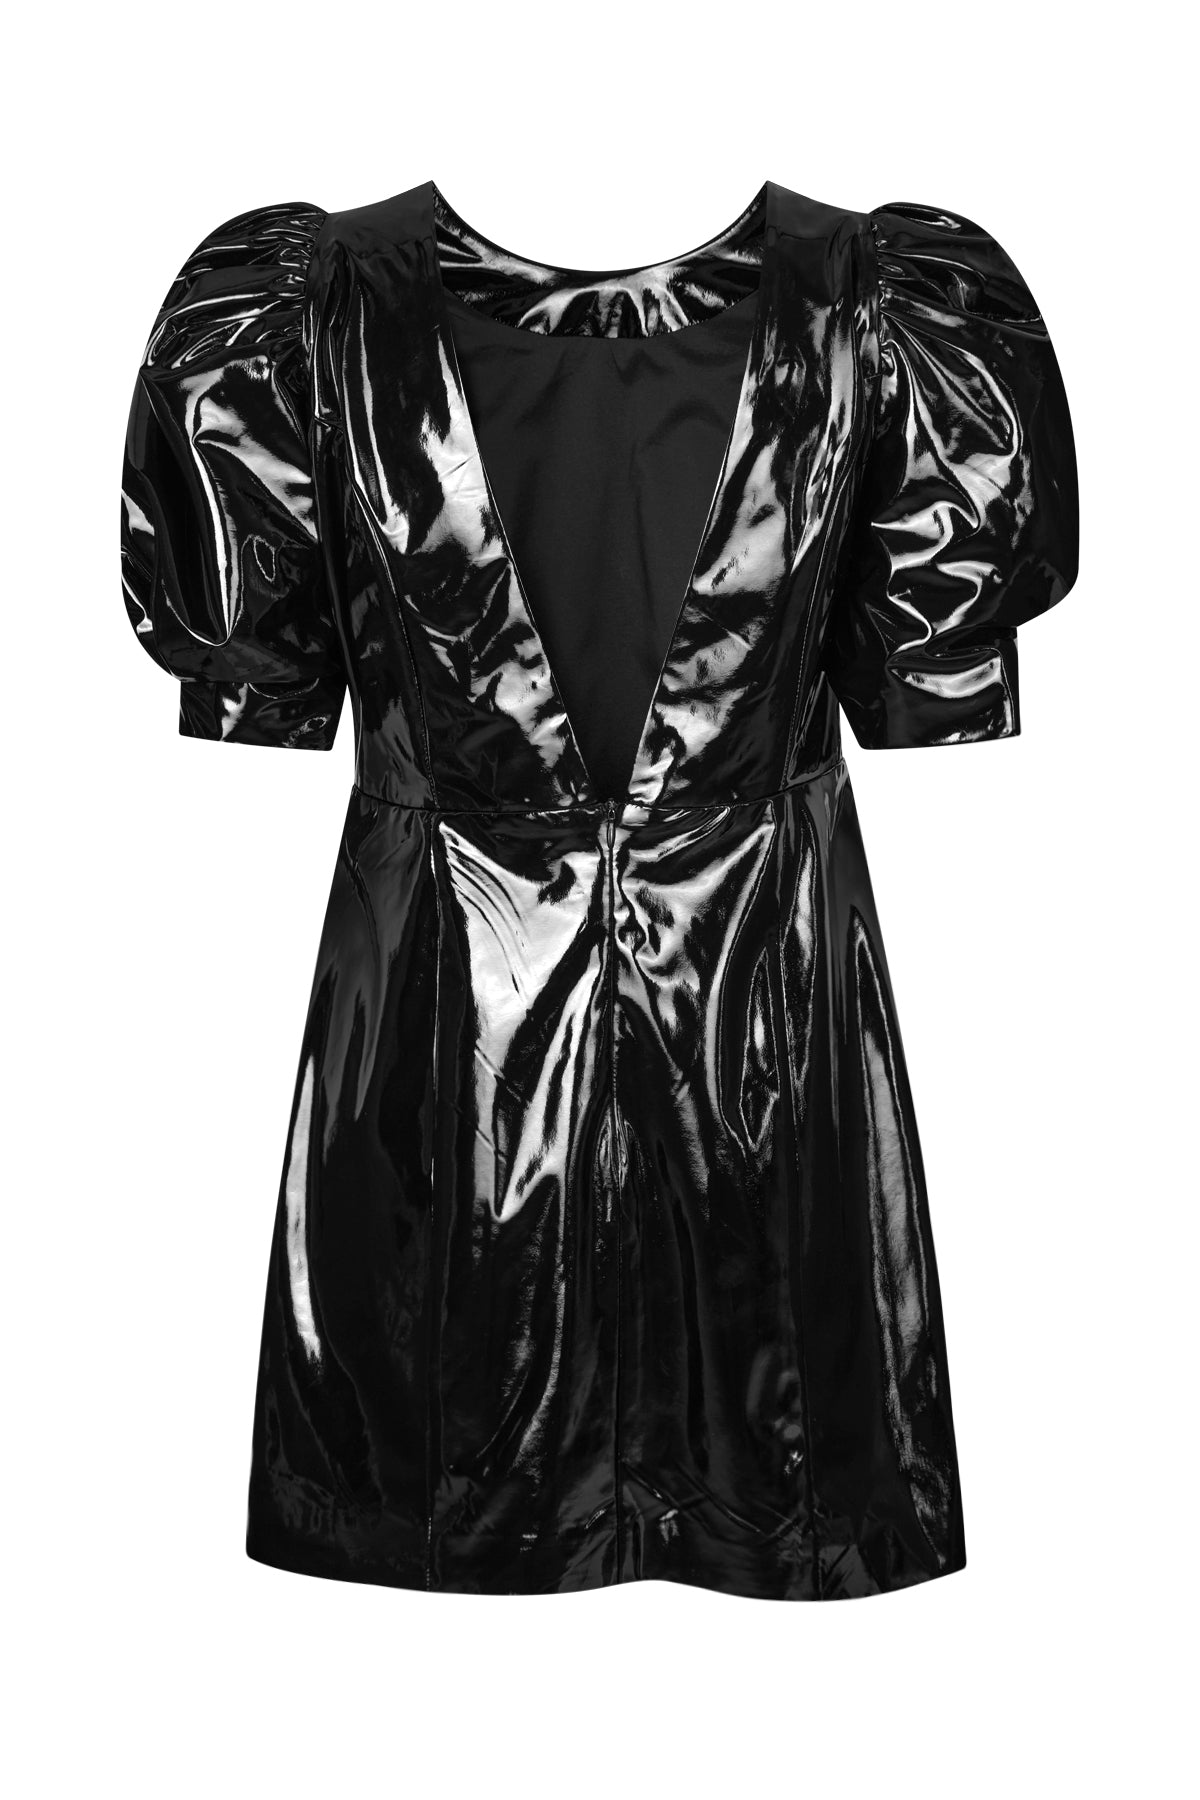 CRAS Paige Dress Dress 9999 Black